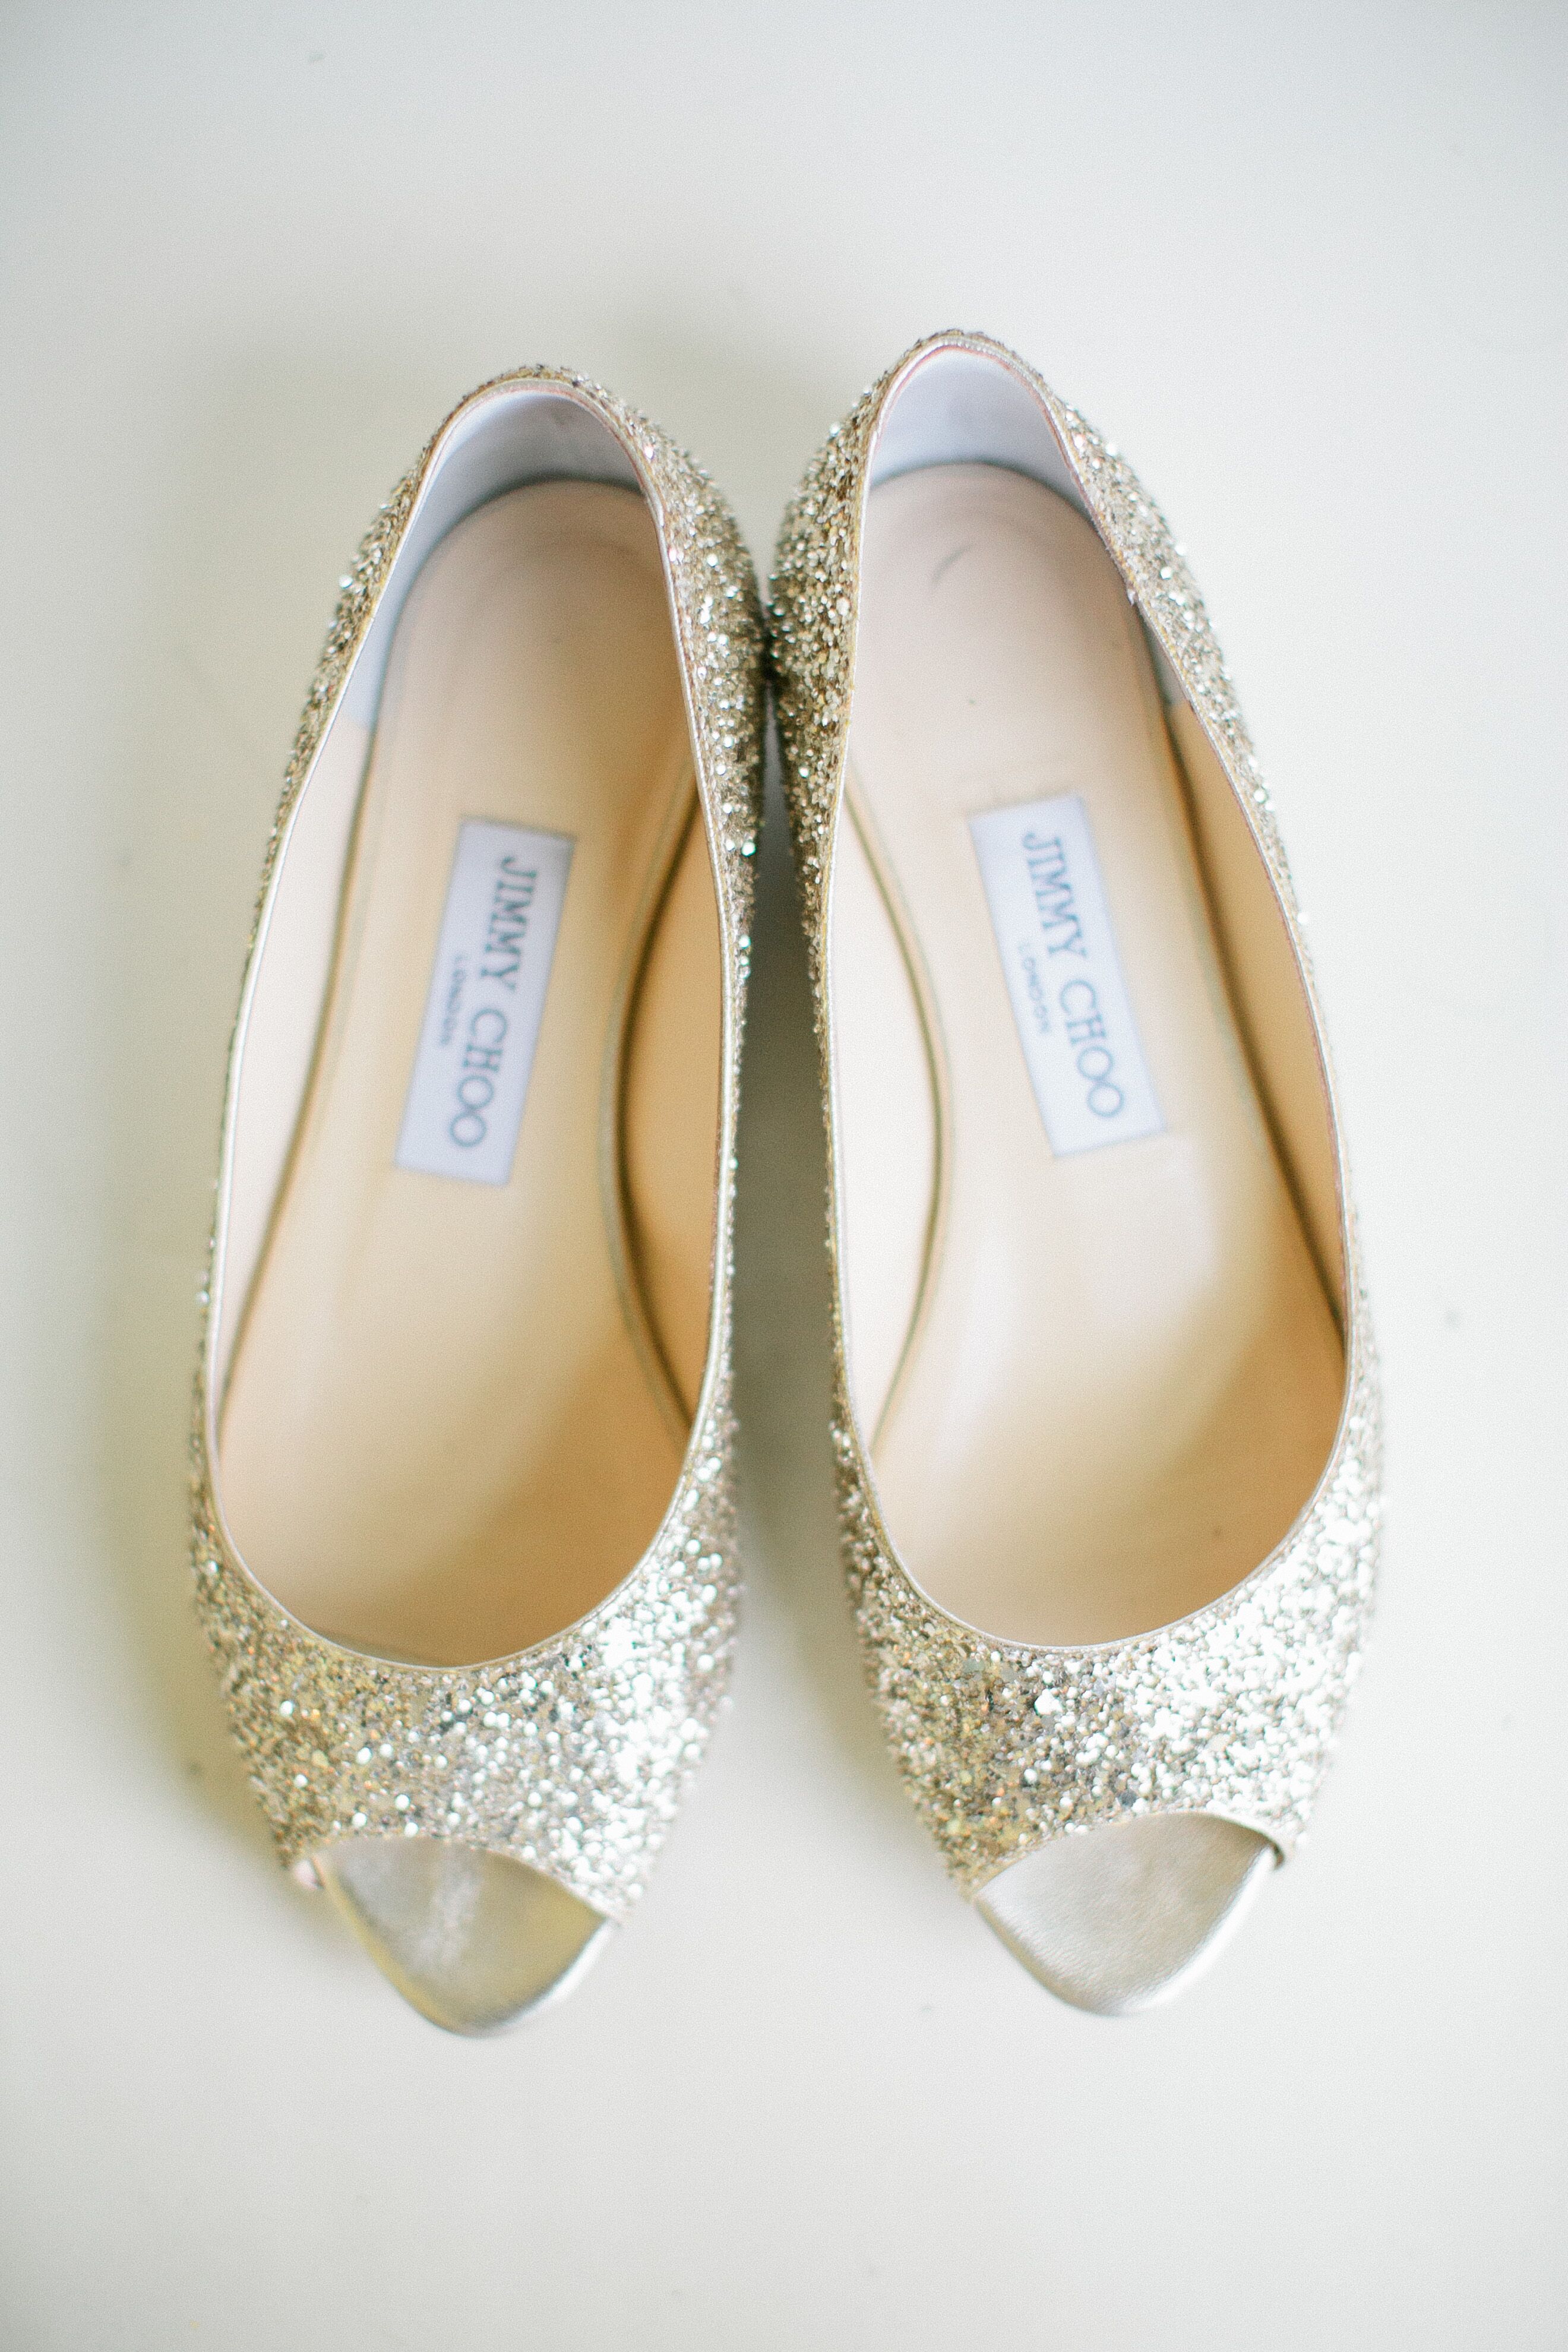 flat jimmy choo wedding shoes